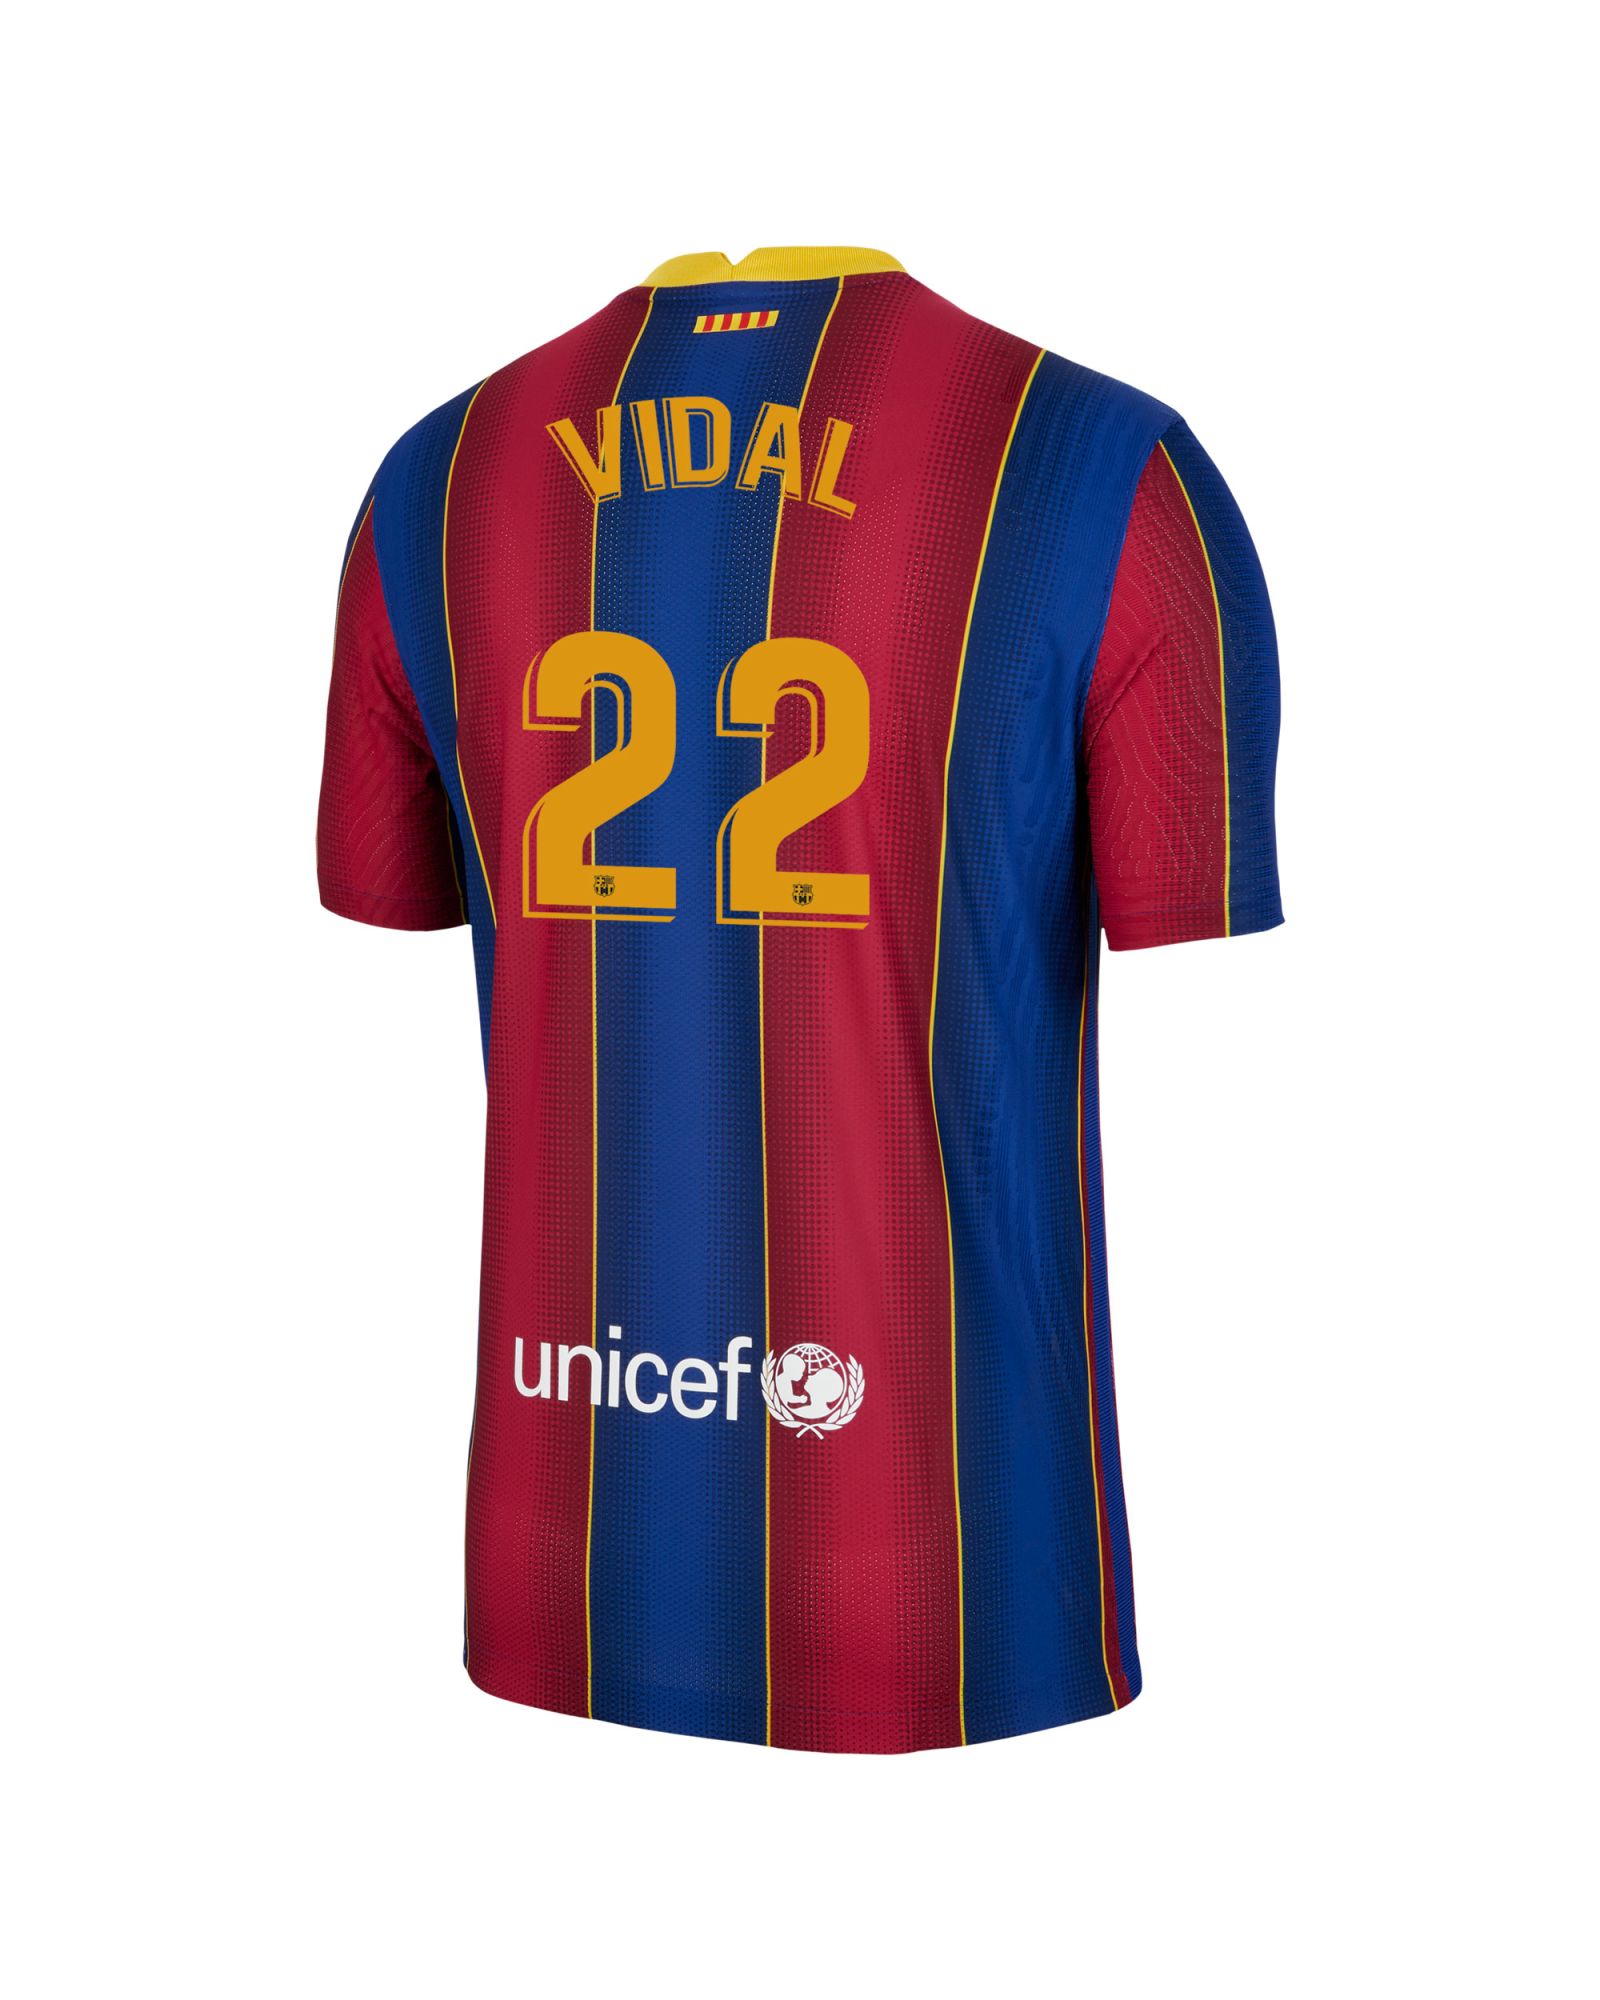 Camiseta 1ª FC Barcelona 2020/2021 Vapor Match  Vidal - Fútbol Factory